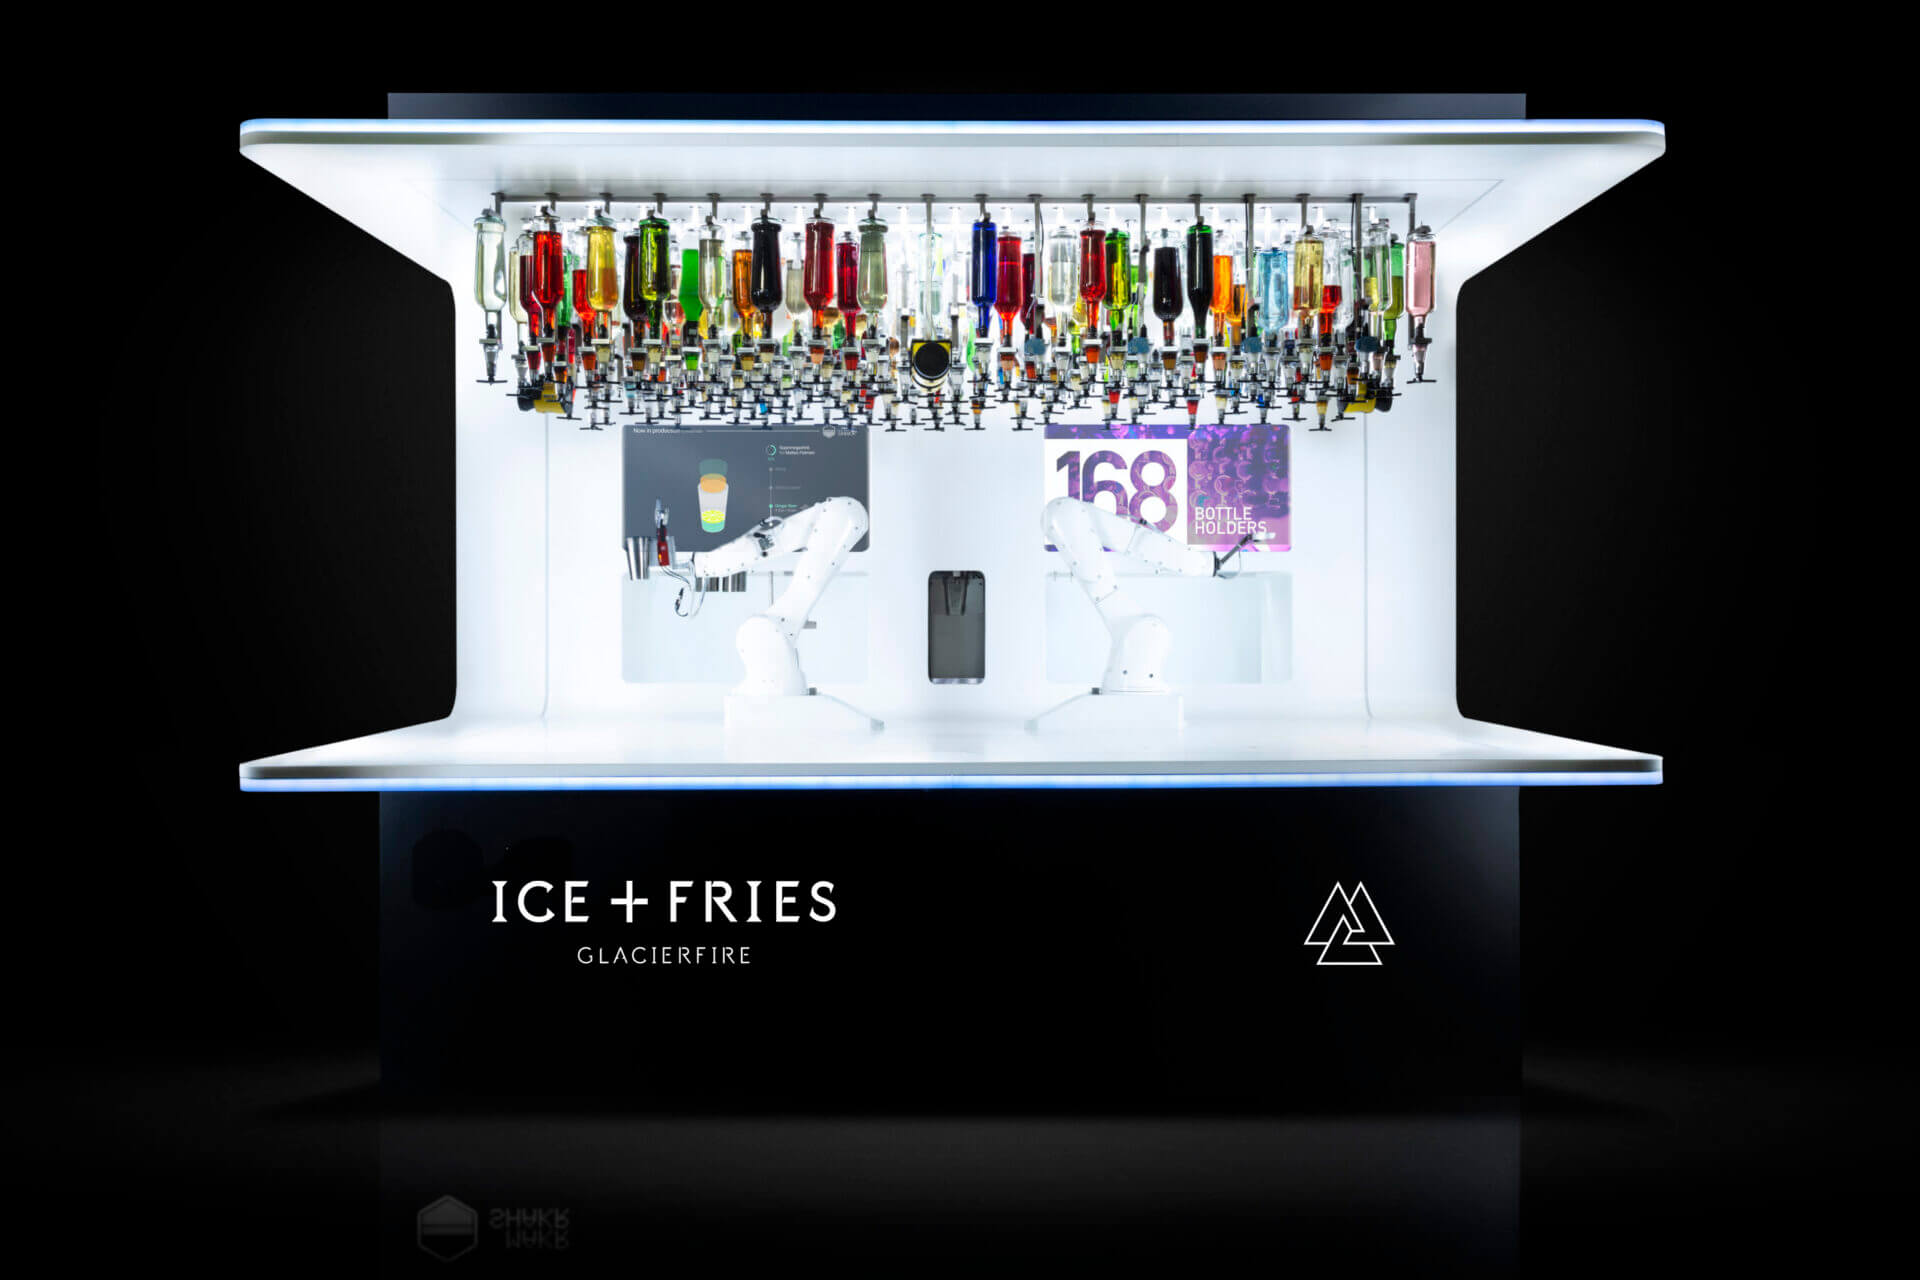 Ice + Fries bionic street food bar in Iceland